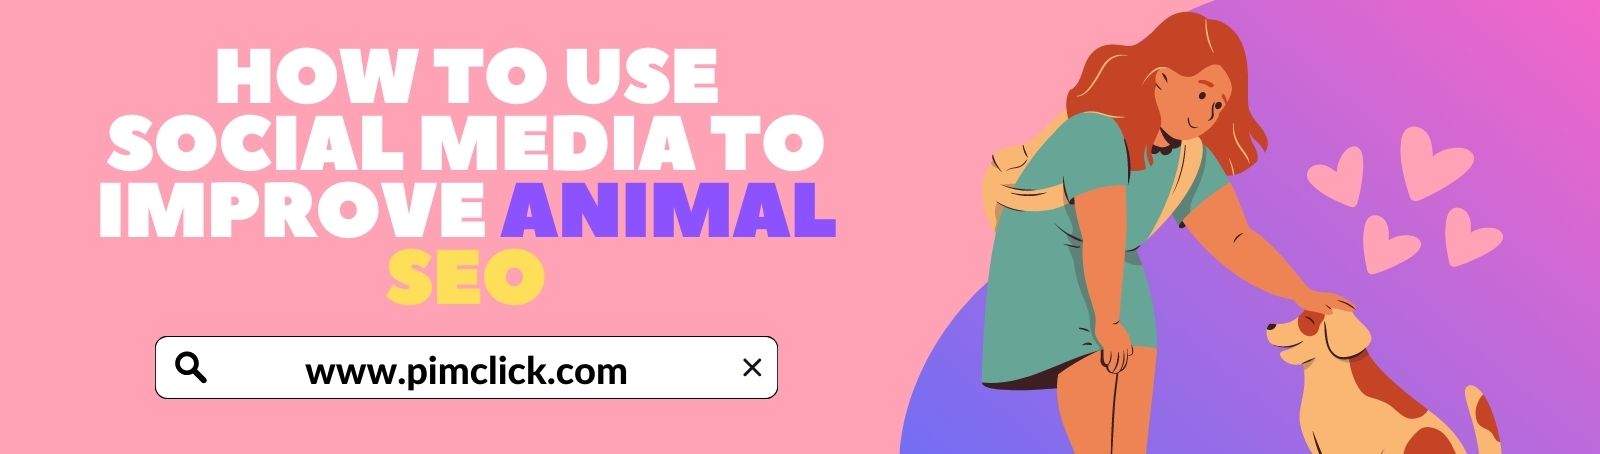 how-to-use-social-media-to-improve-animal-seo